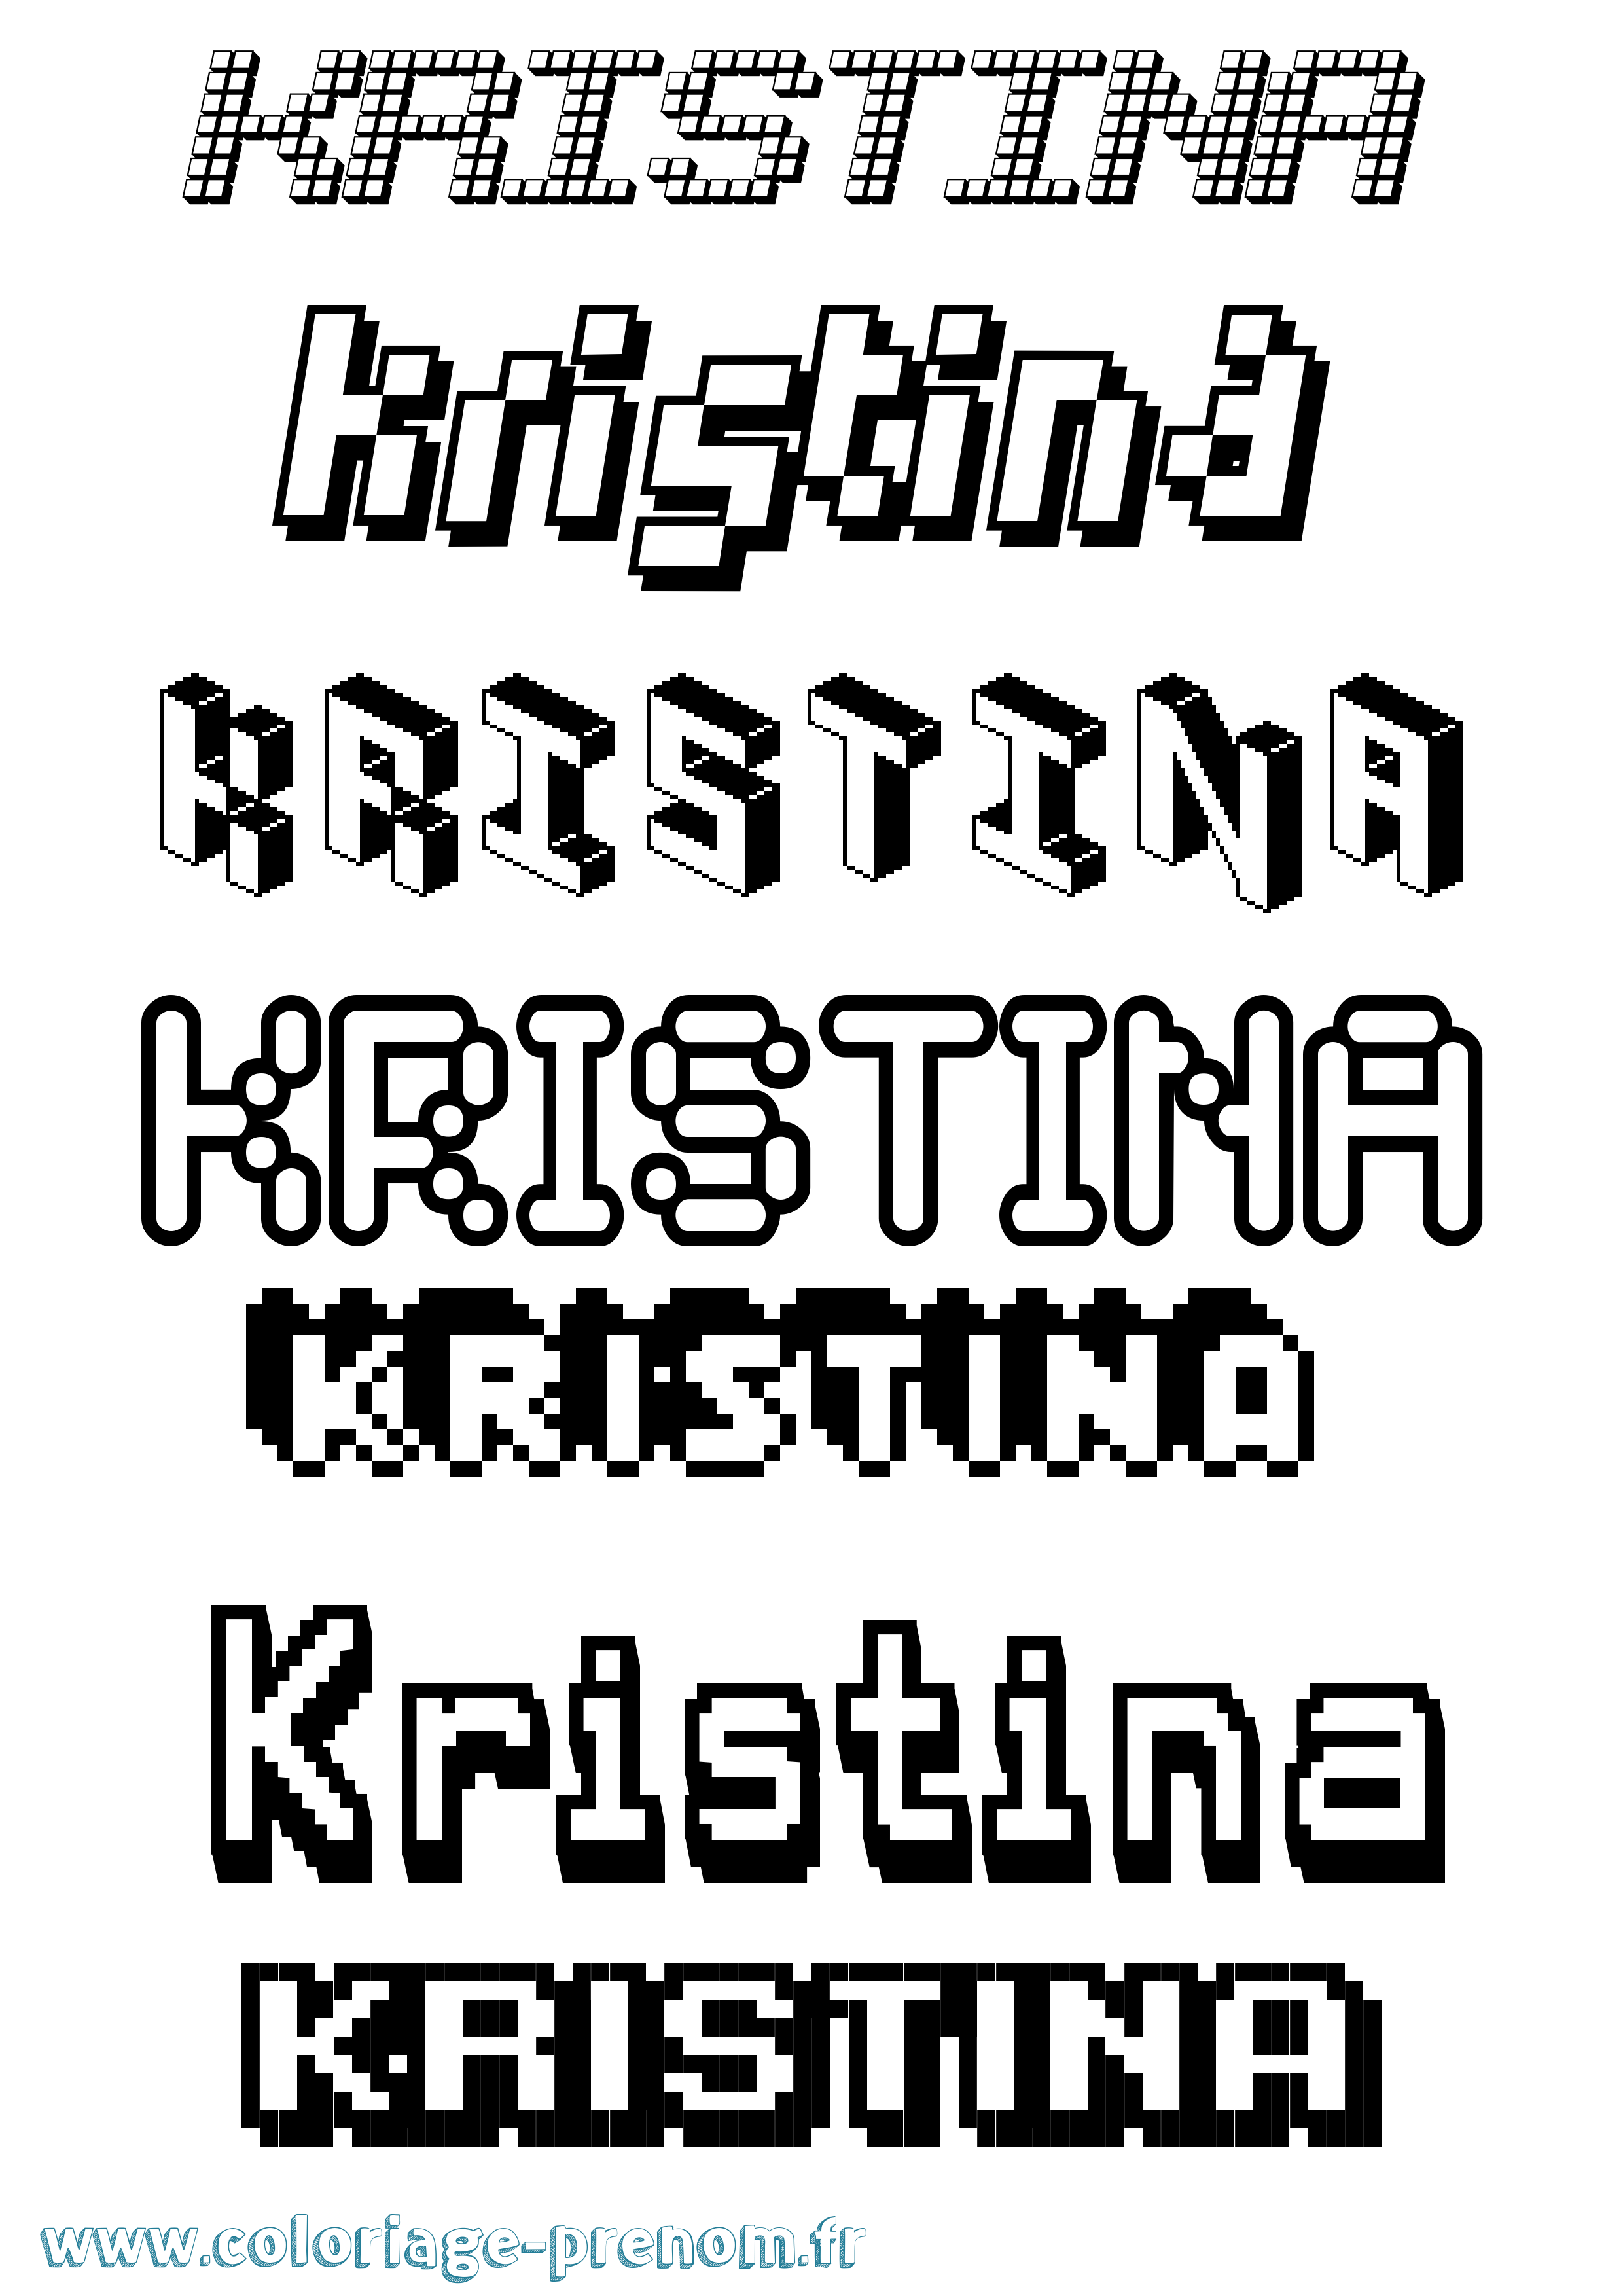 Coloriage prénom Kristina Pixel